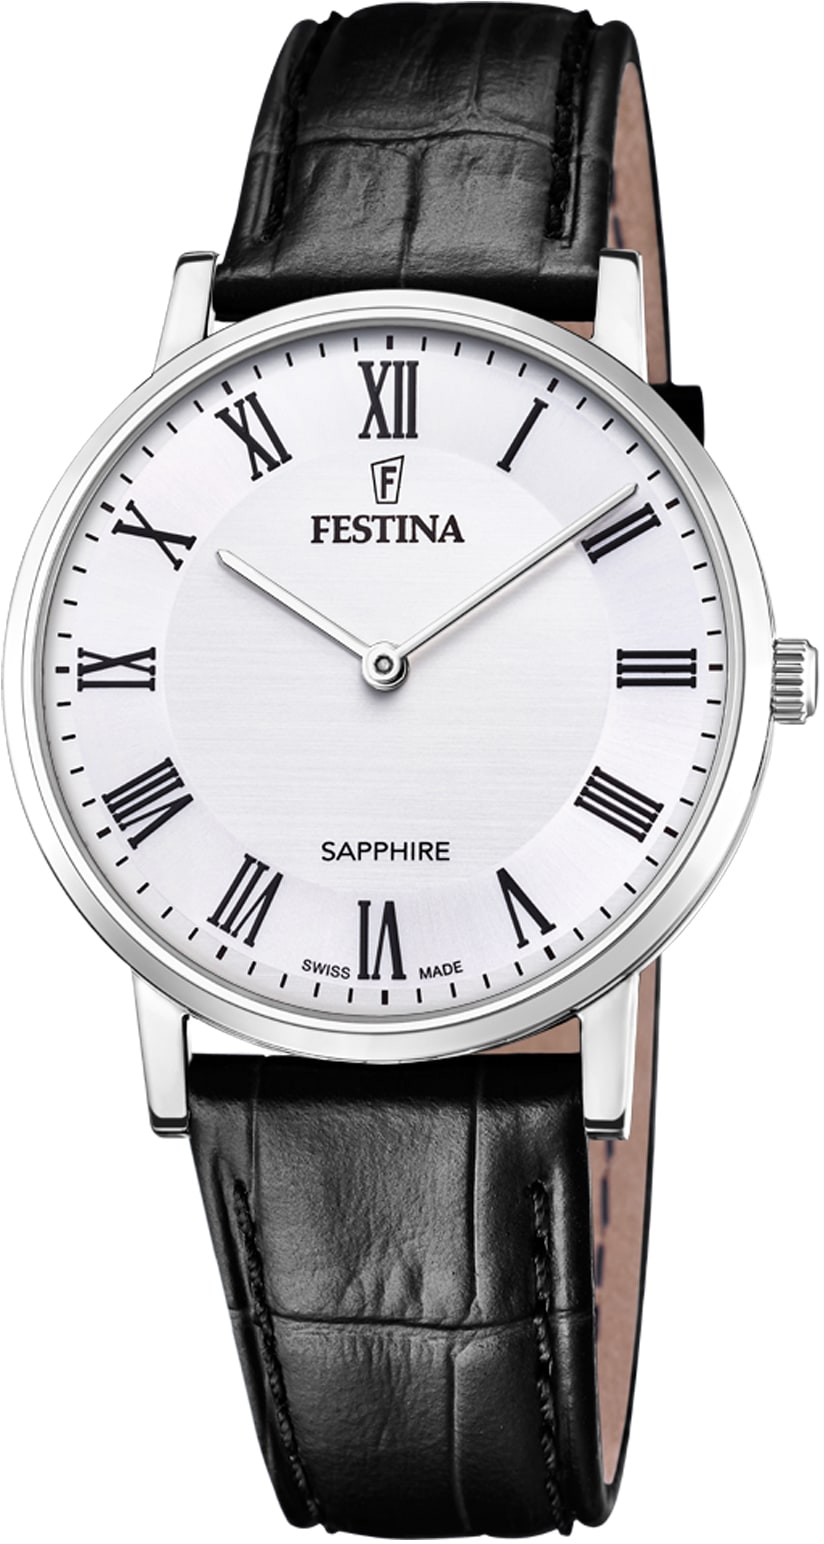 Festina Schweizer Uhr »Festina Swiss Made, F20012/2« bei ♕